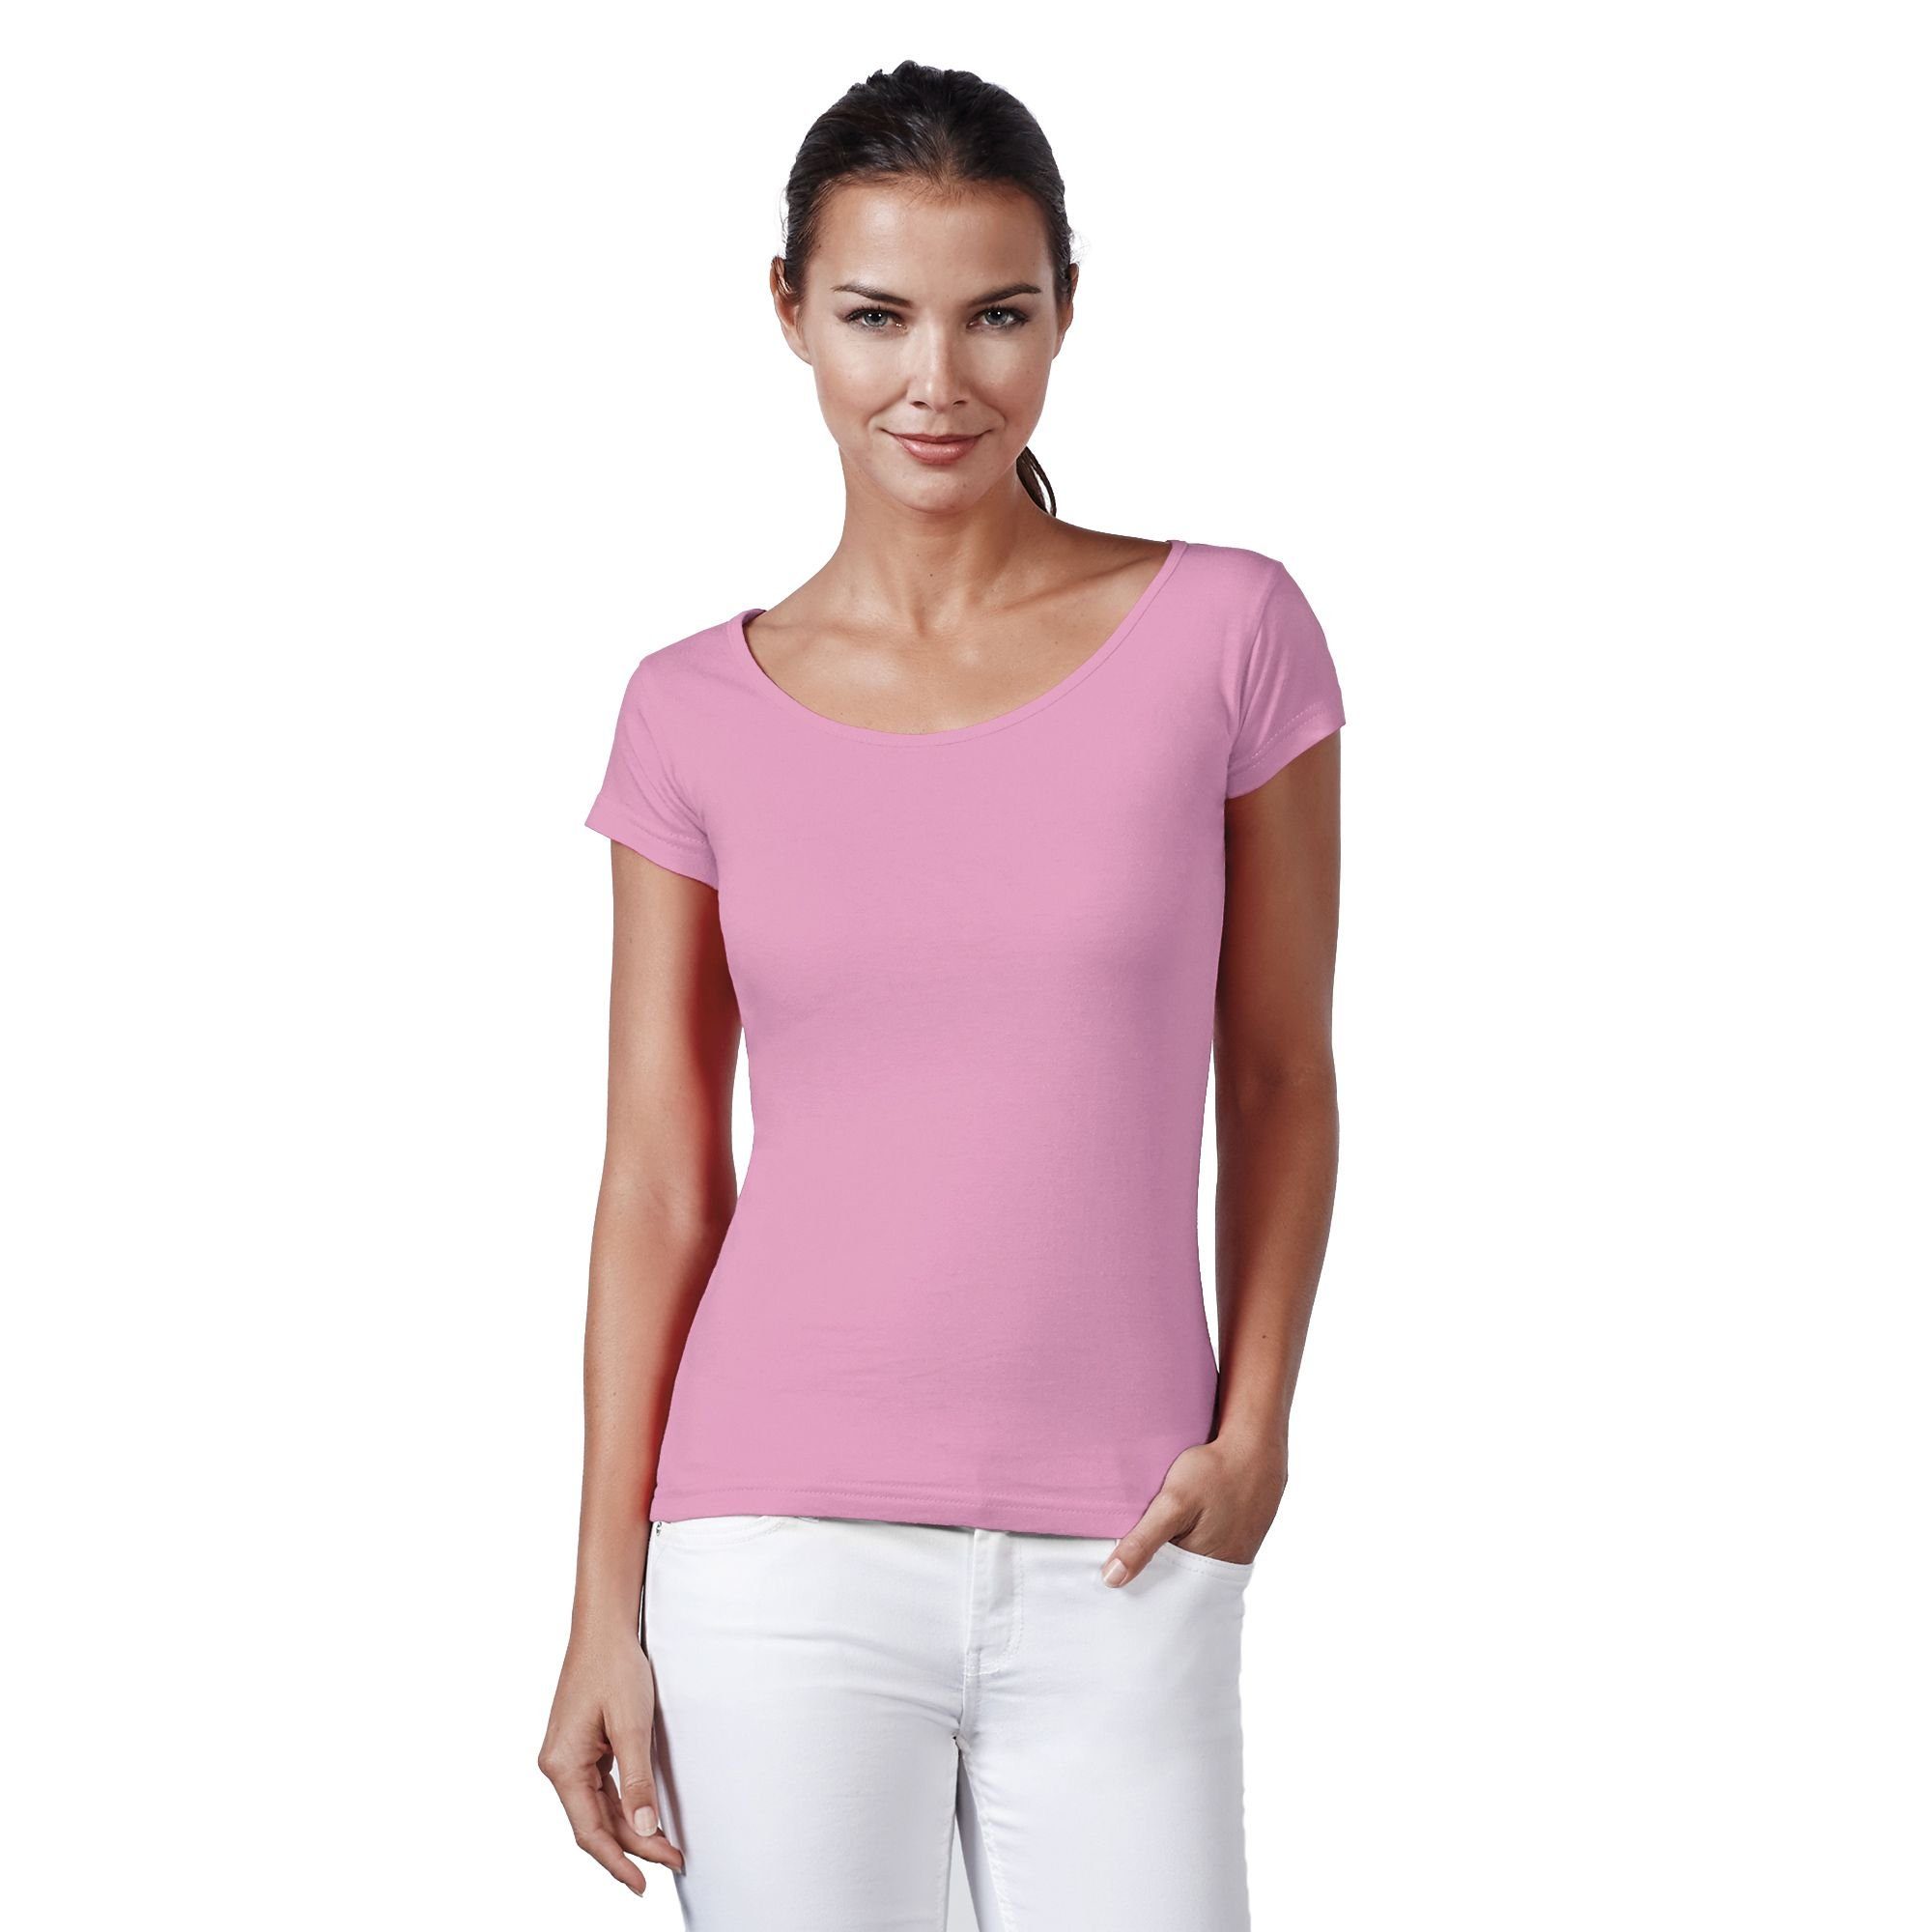 Neverless Print-Shirt Neverless® Basic T-Shirt Damen Slim Fit Baumwolle  einfarbig Weiter Rundhals Ausschnitt mit Print